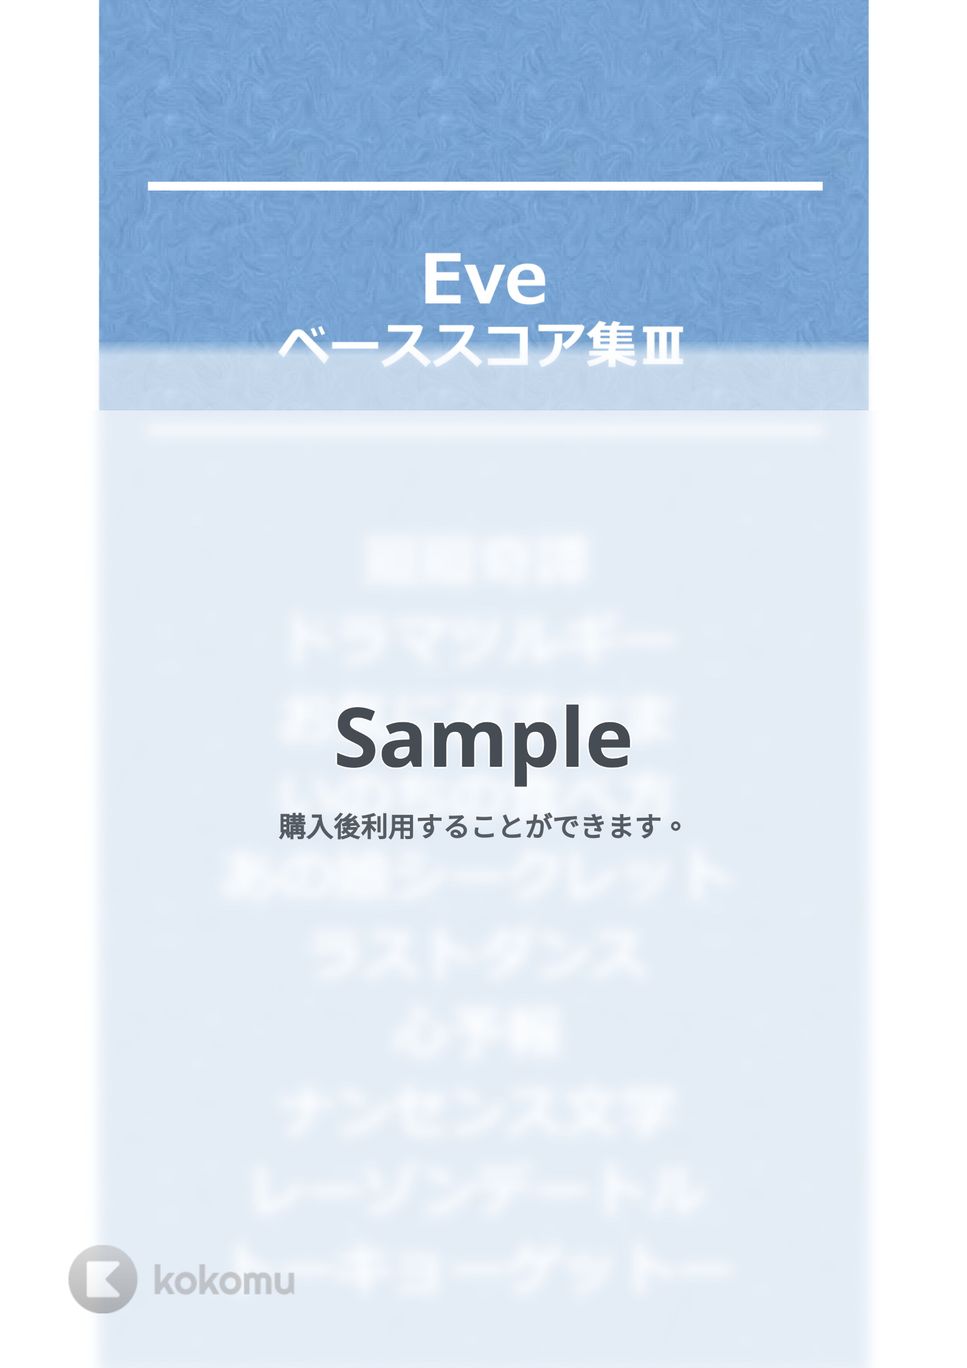 Eve - Eve ベースTAB譜面 10曲セット集Ⅰ () by たぶべー